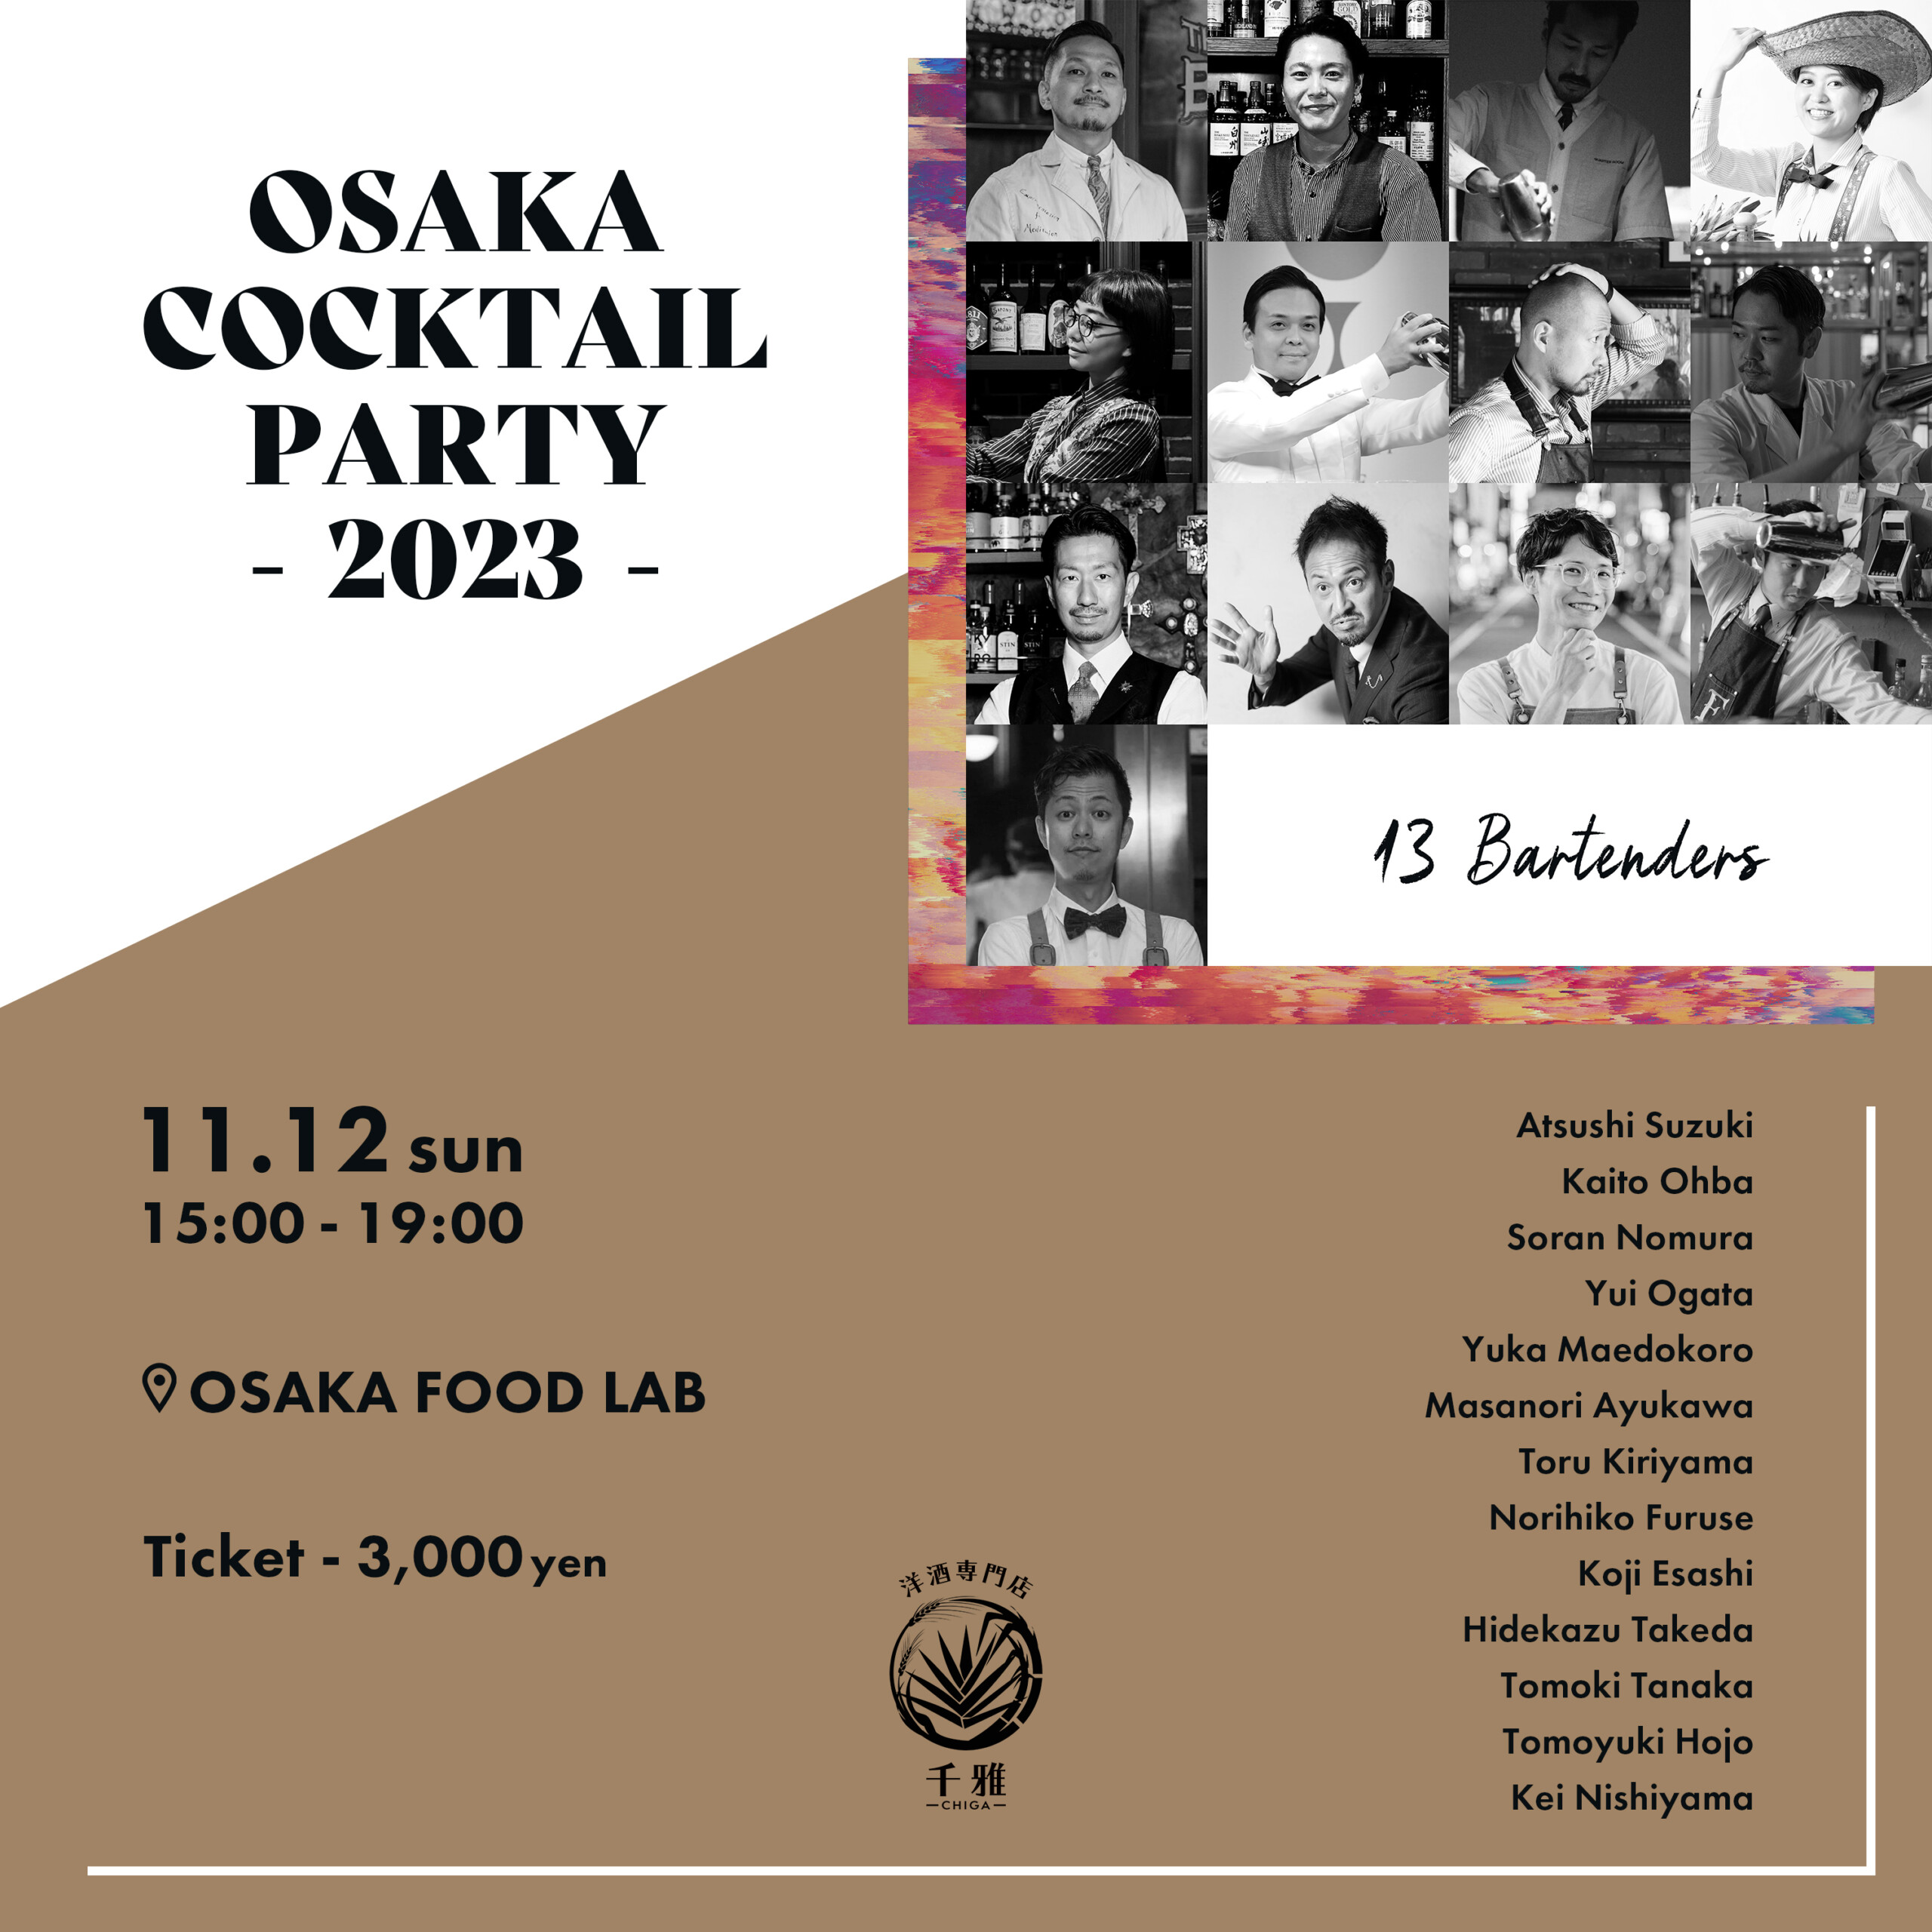 OSAKA COCKTAIL PARTY 2023